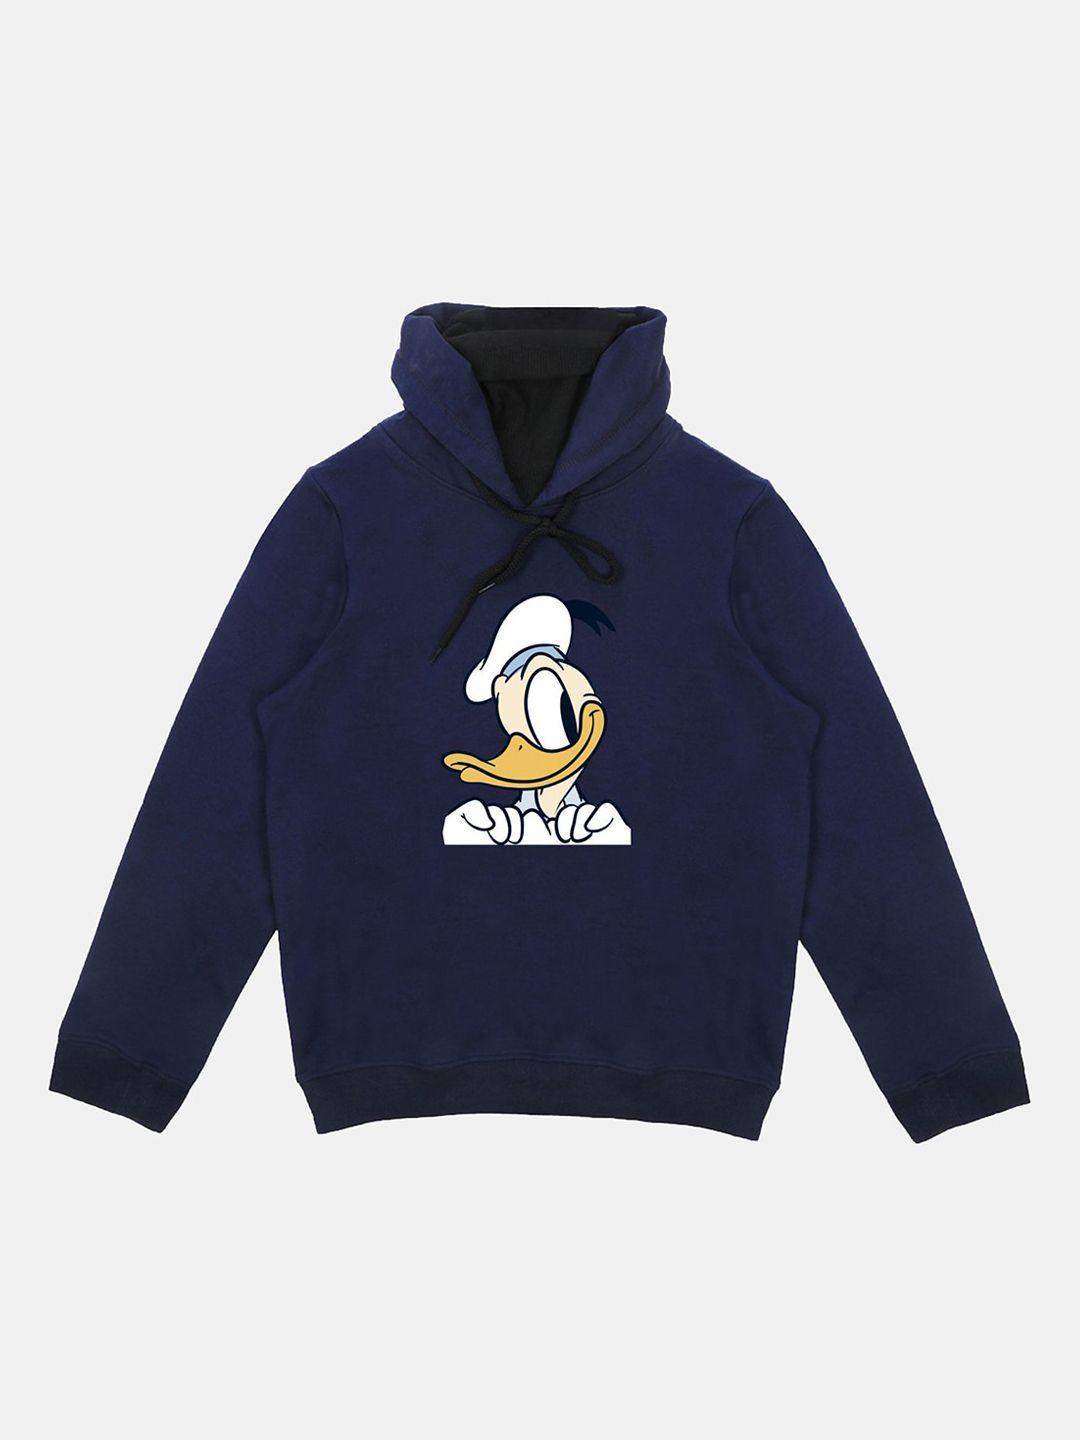 disney by wear your mind kids navy blue donald duck printed hooded sweatshirt